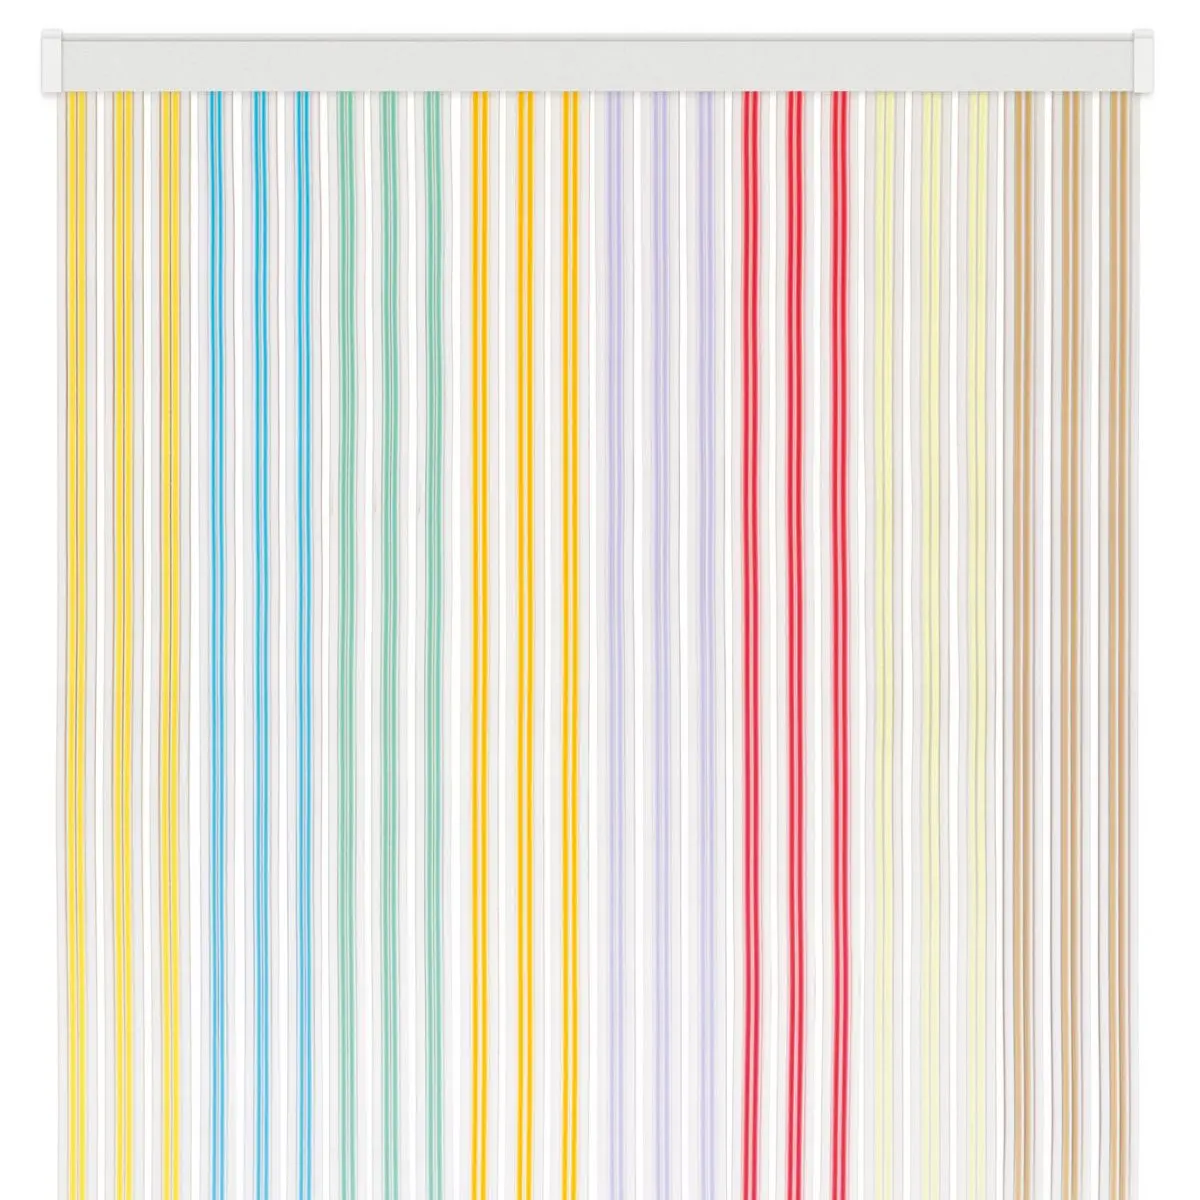 Perdeaua usii Band Lux - 60 x 190 cm, colorata